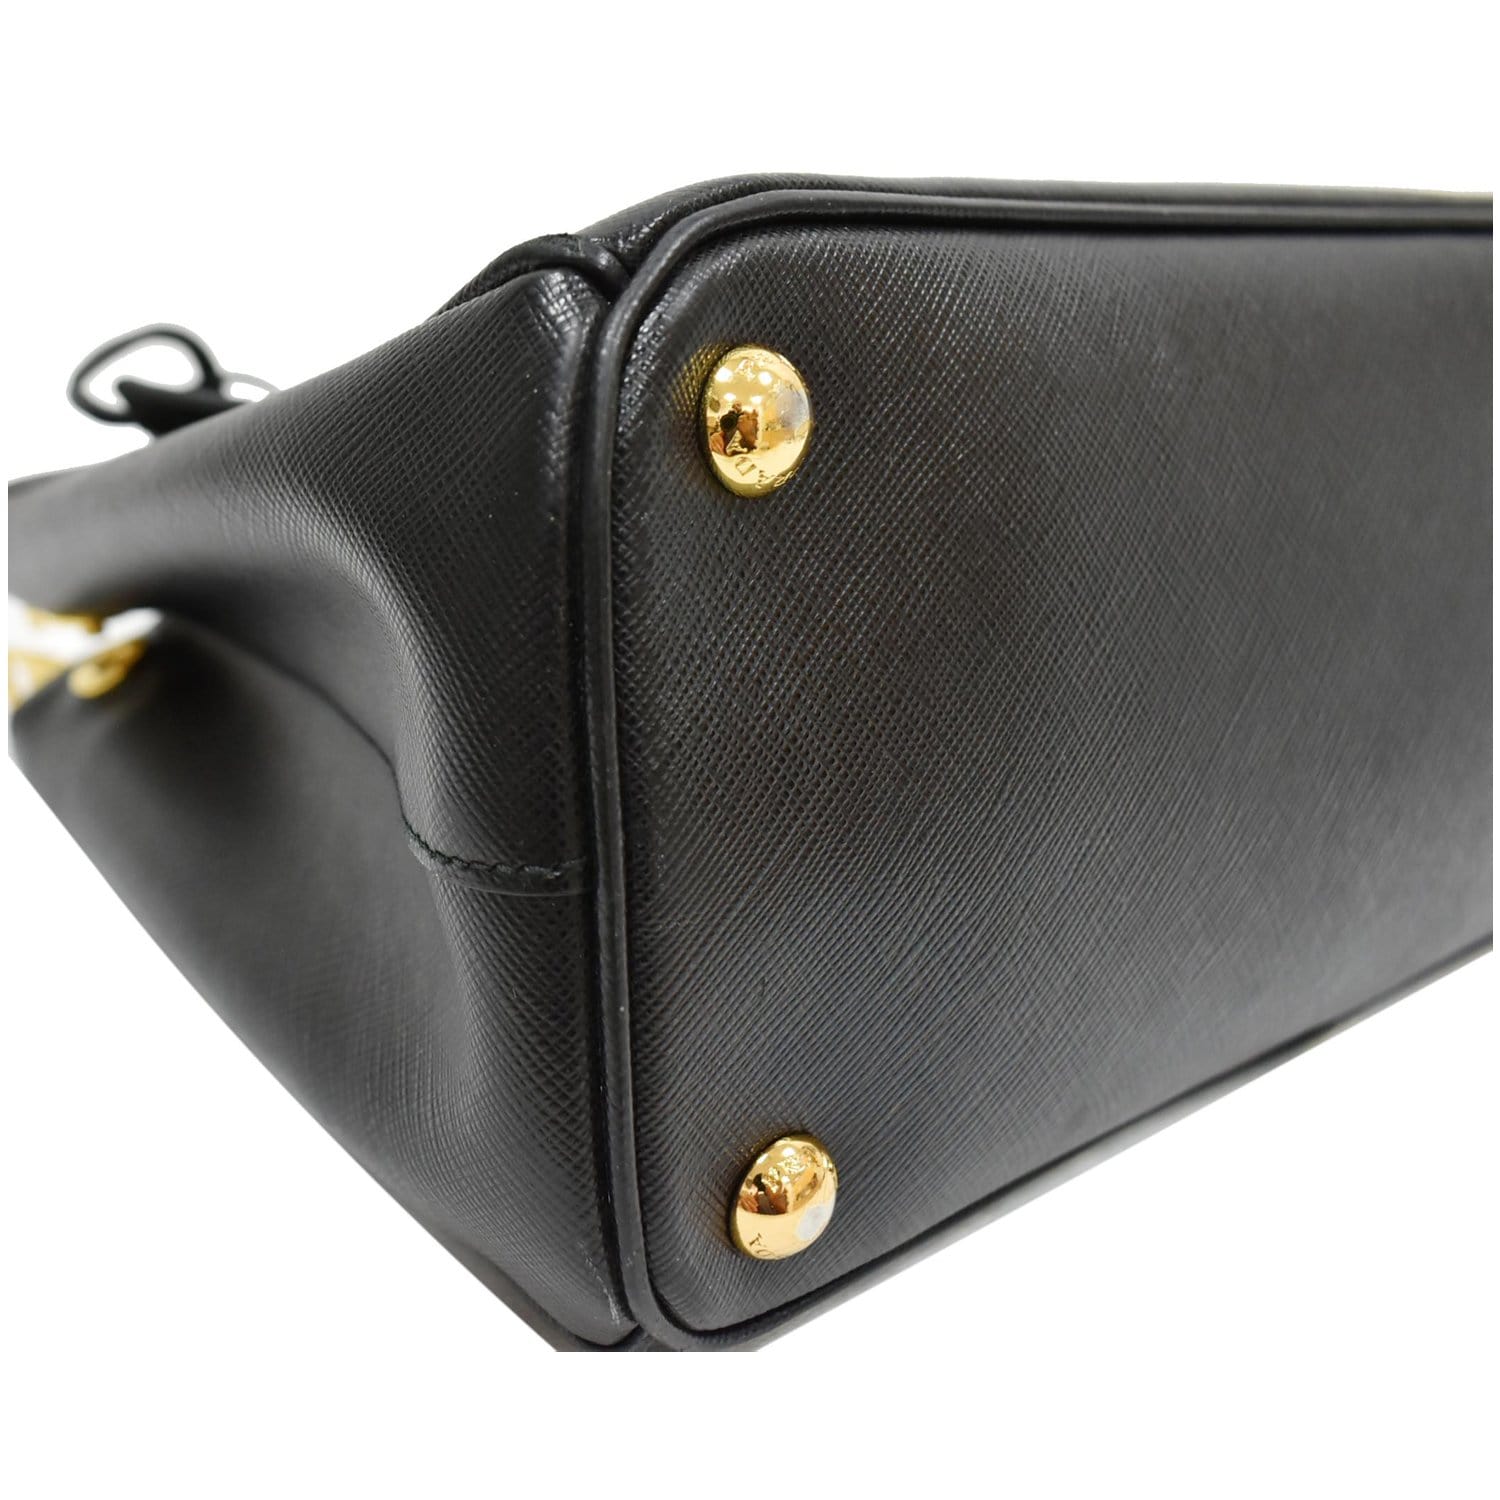 Prada galleria black saffiano leather bag Lux tote